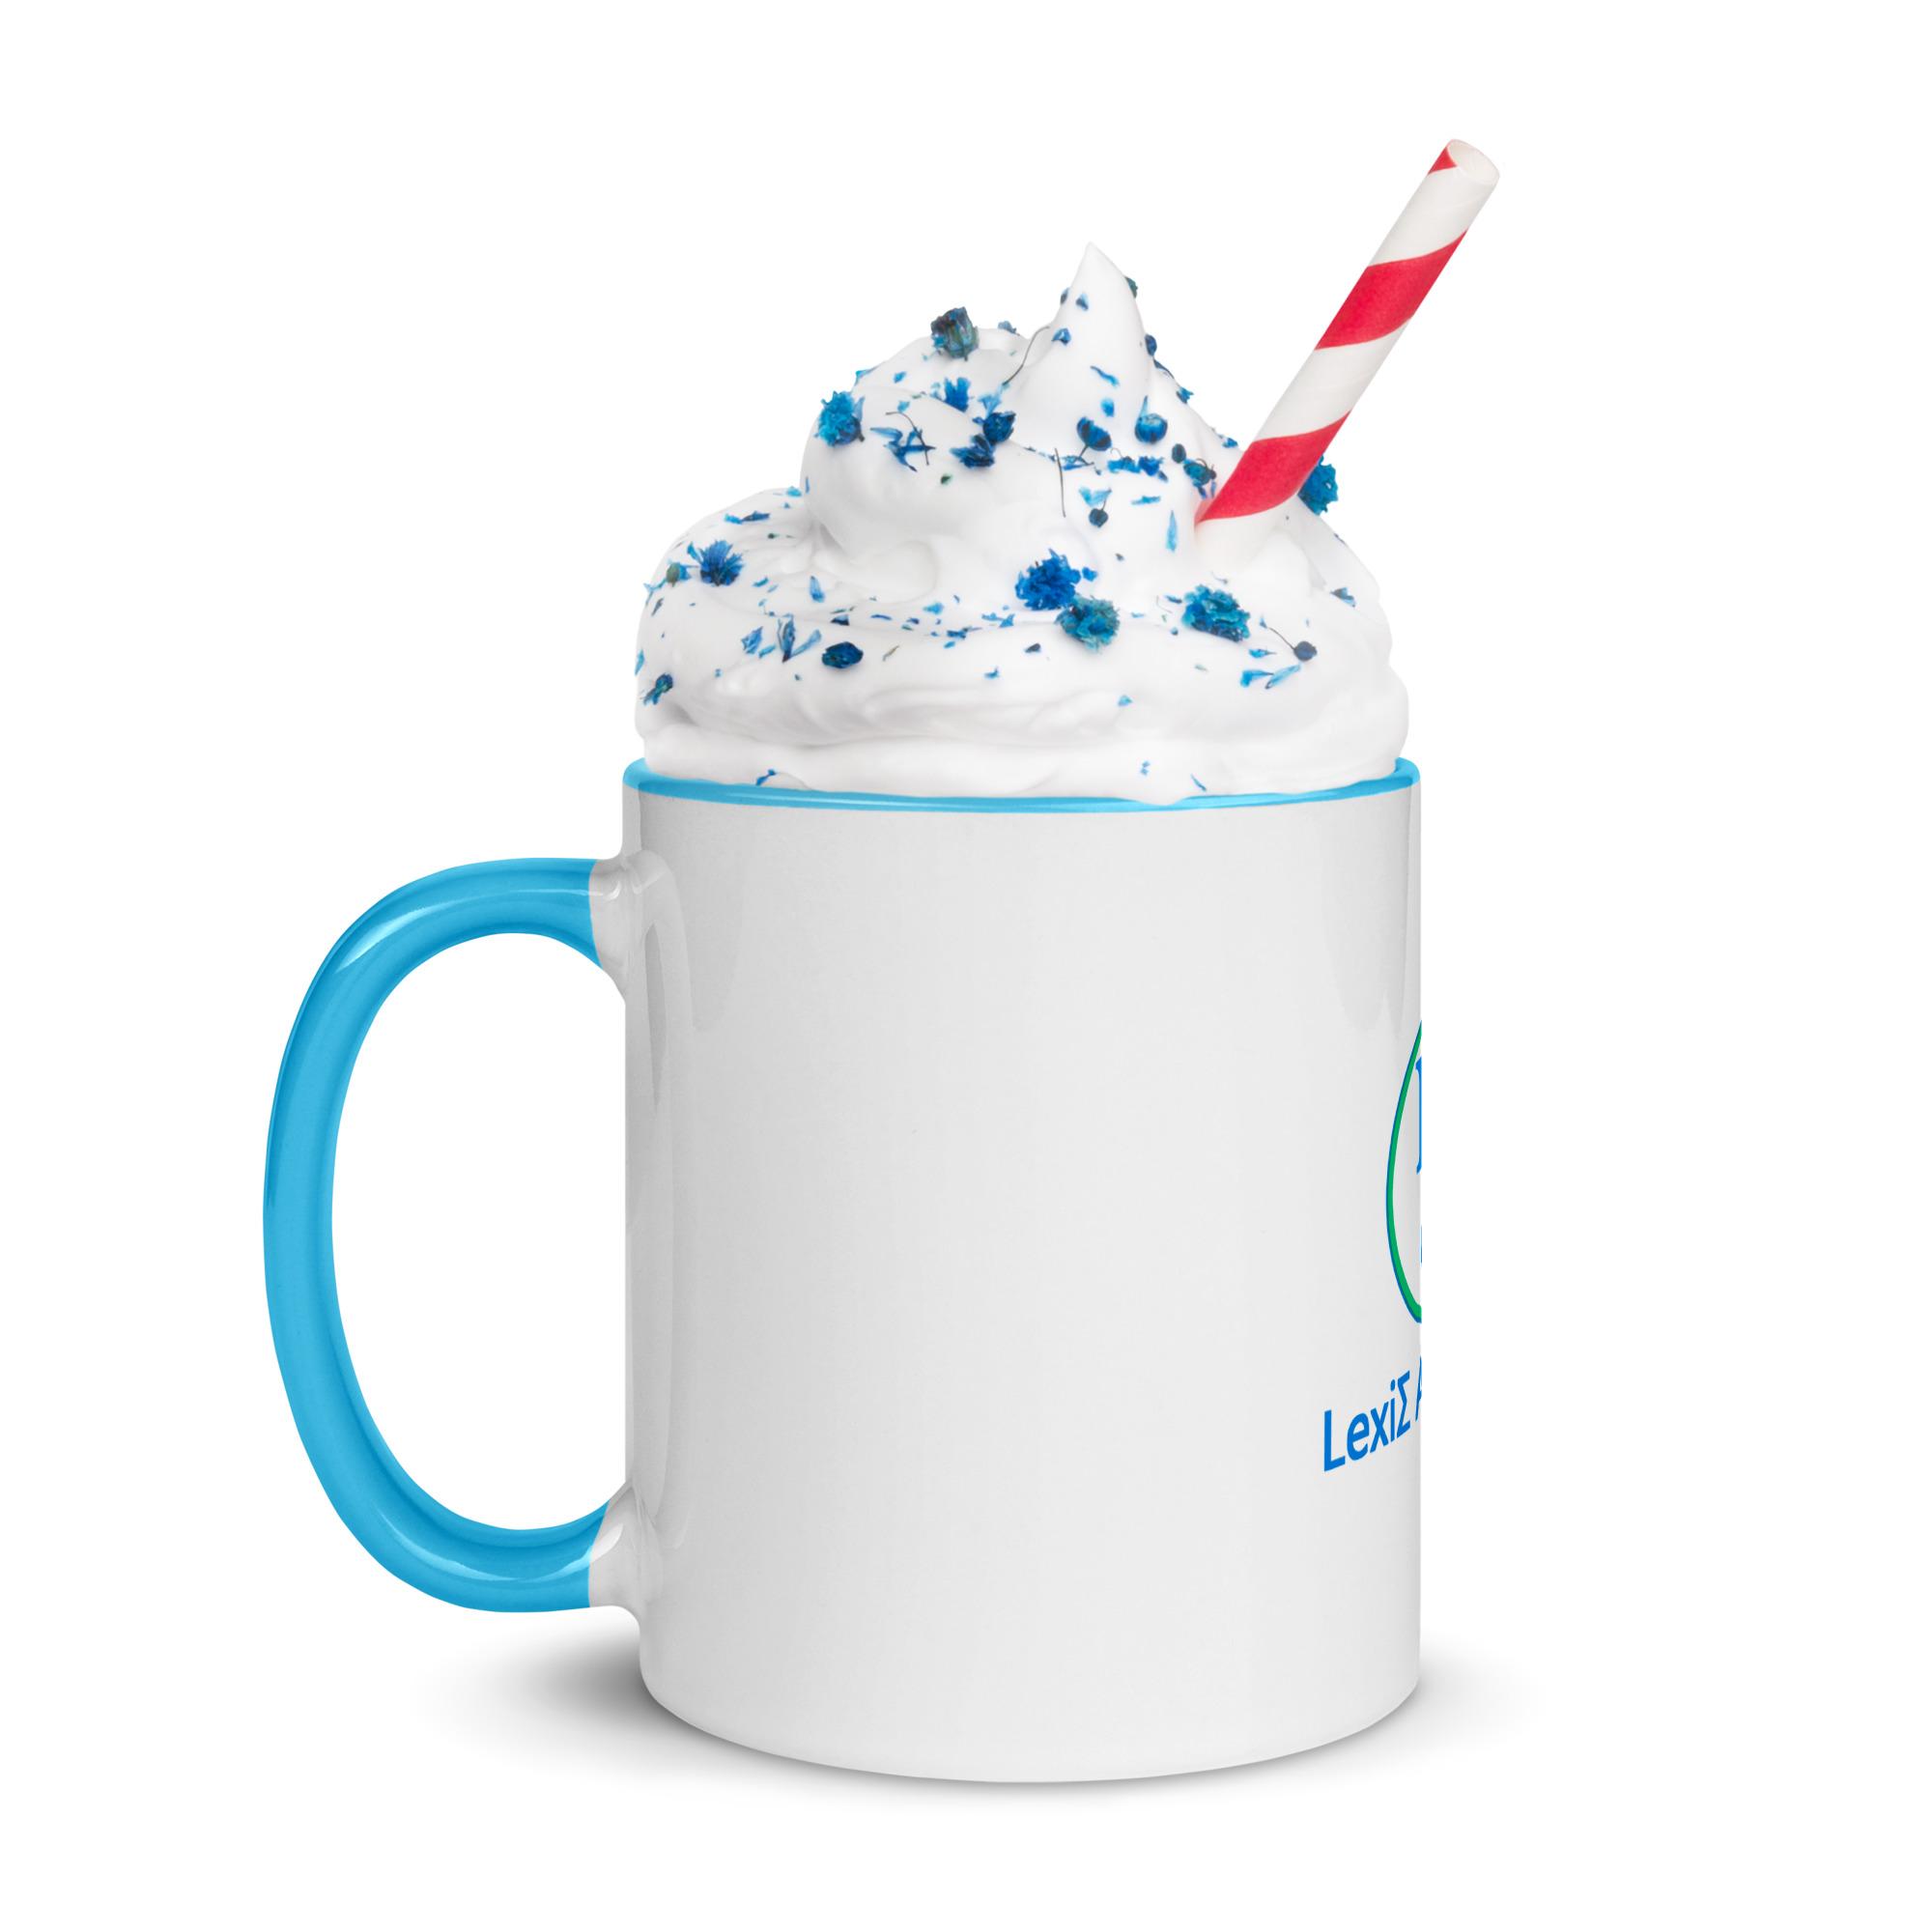 white-ceramic-mug-with-color-inside-blue-11oz-left-634c70fe8ed4c.jpg